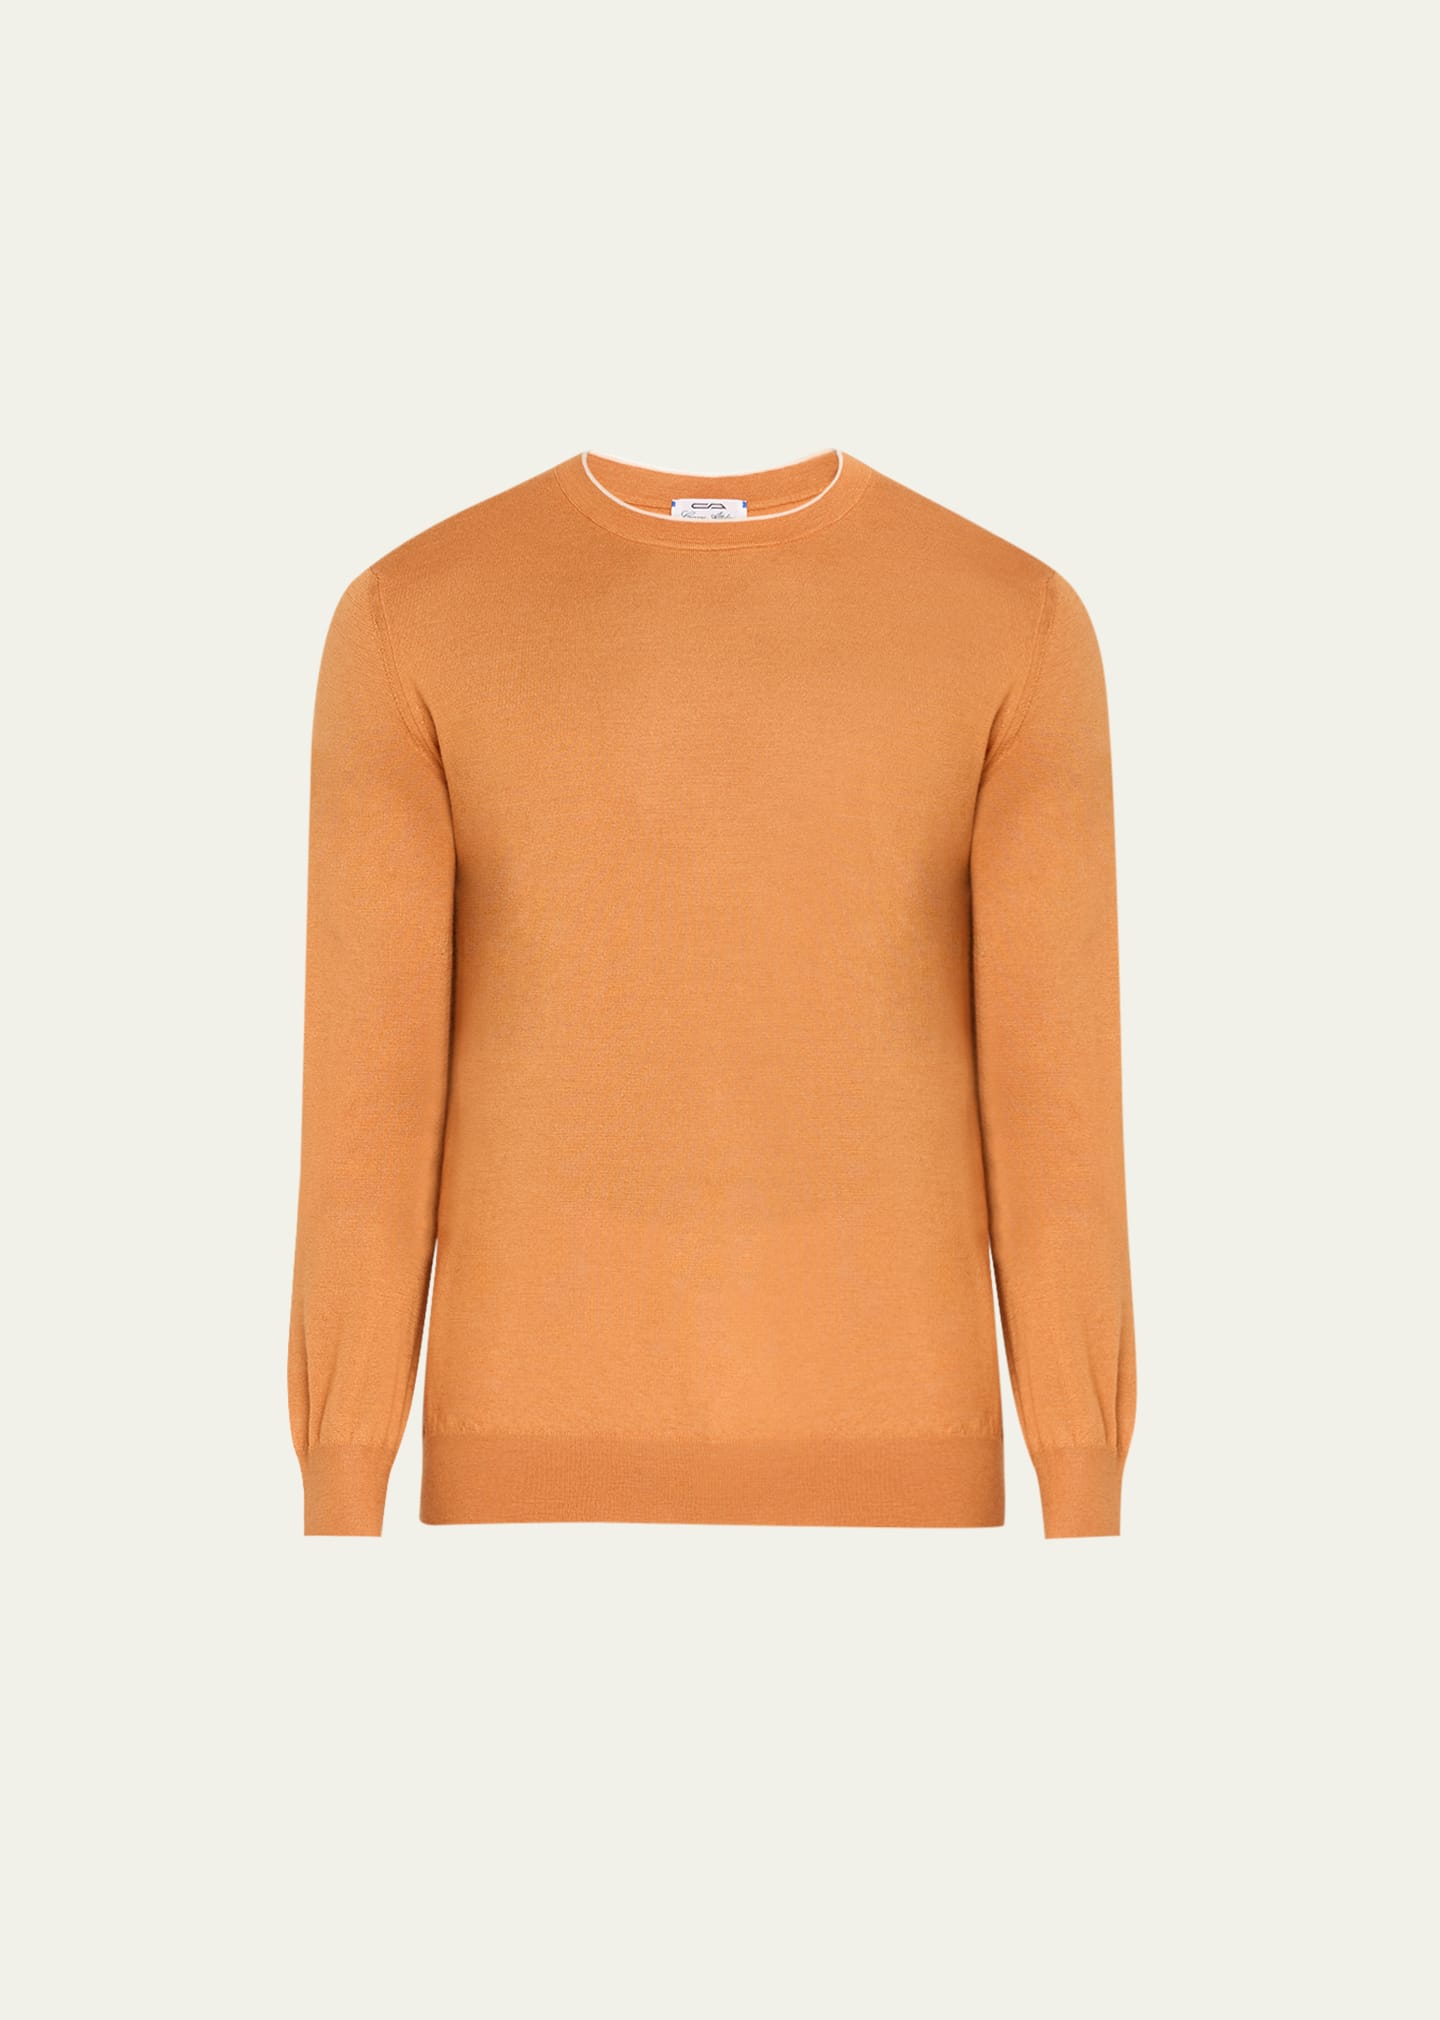 Men's Cashmere-Silk Tipped Crewneck Sweater